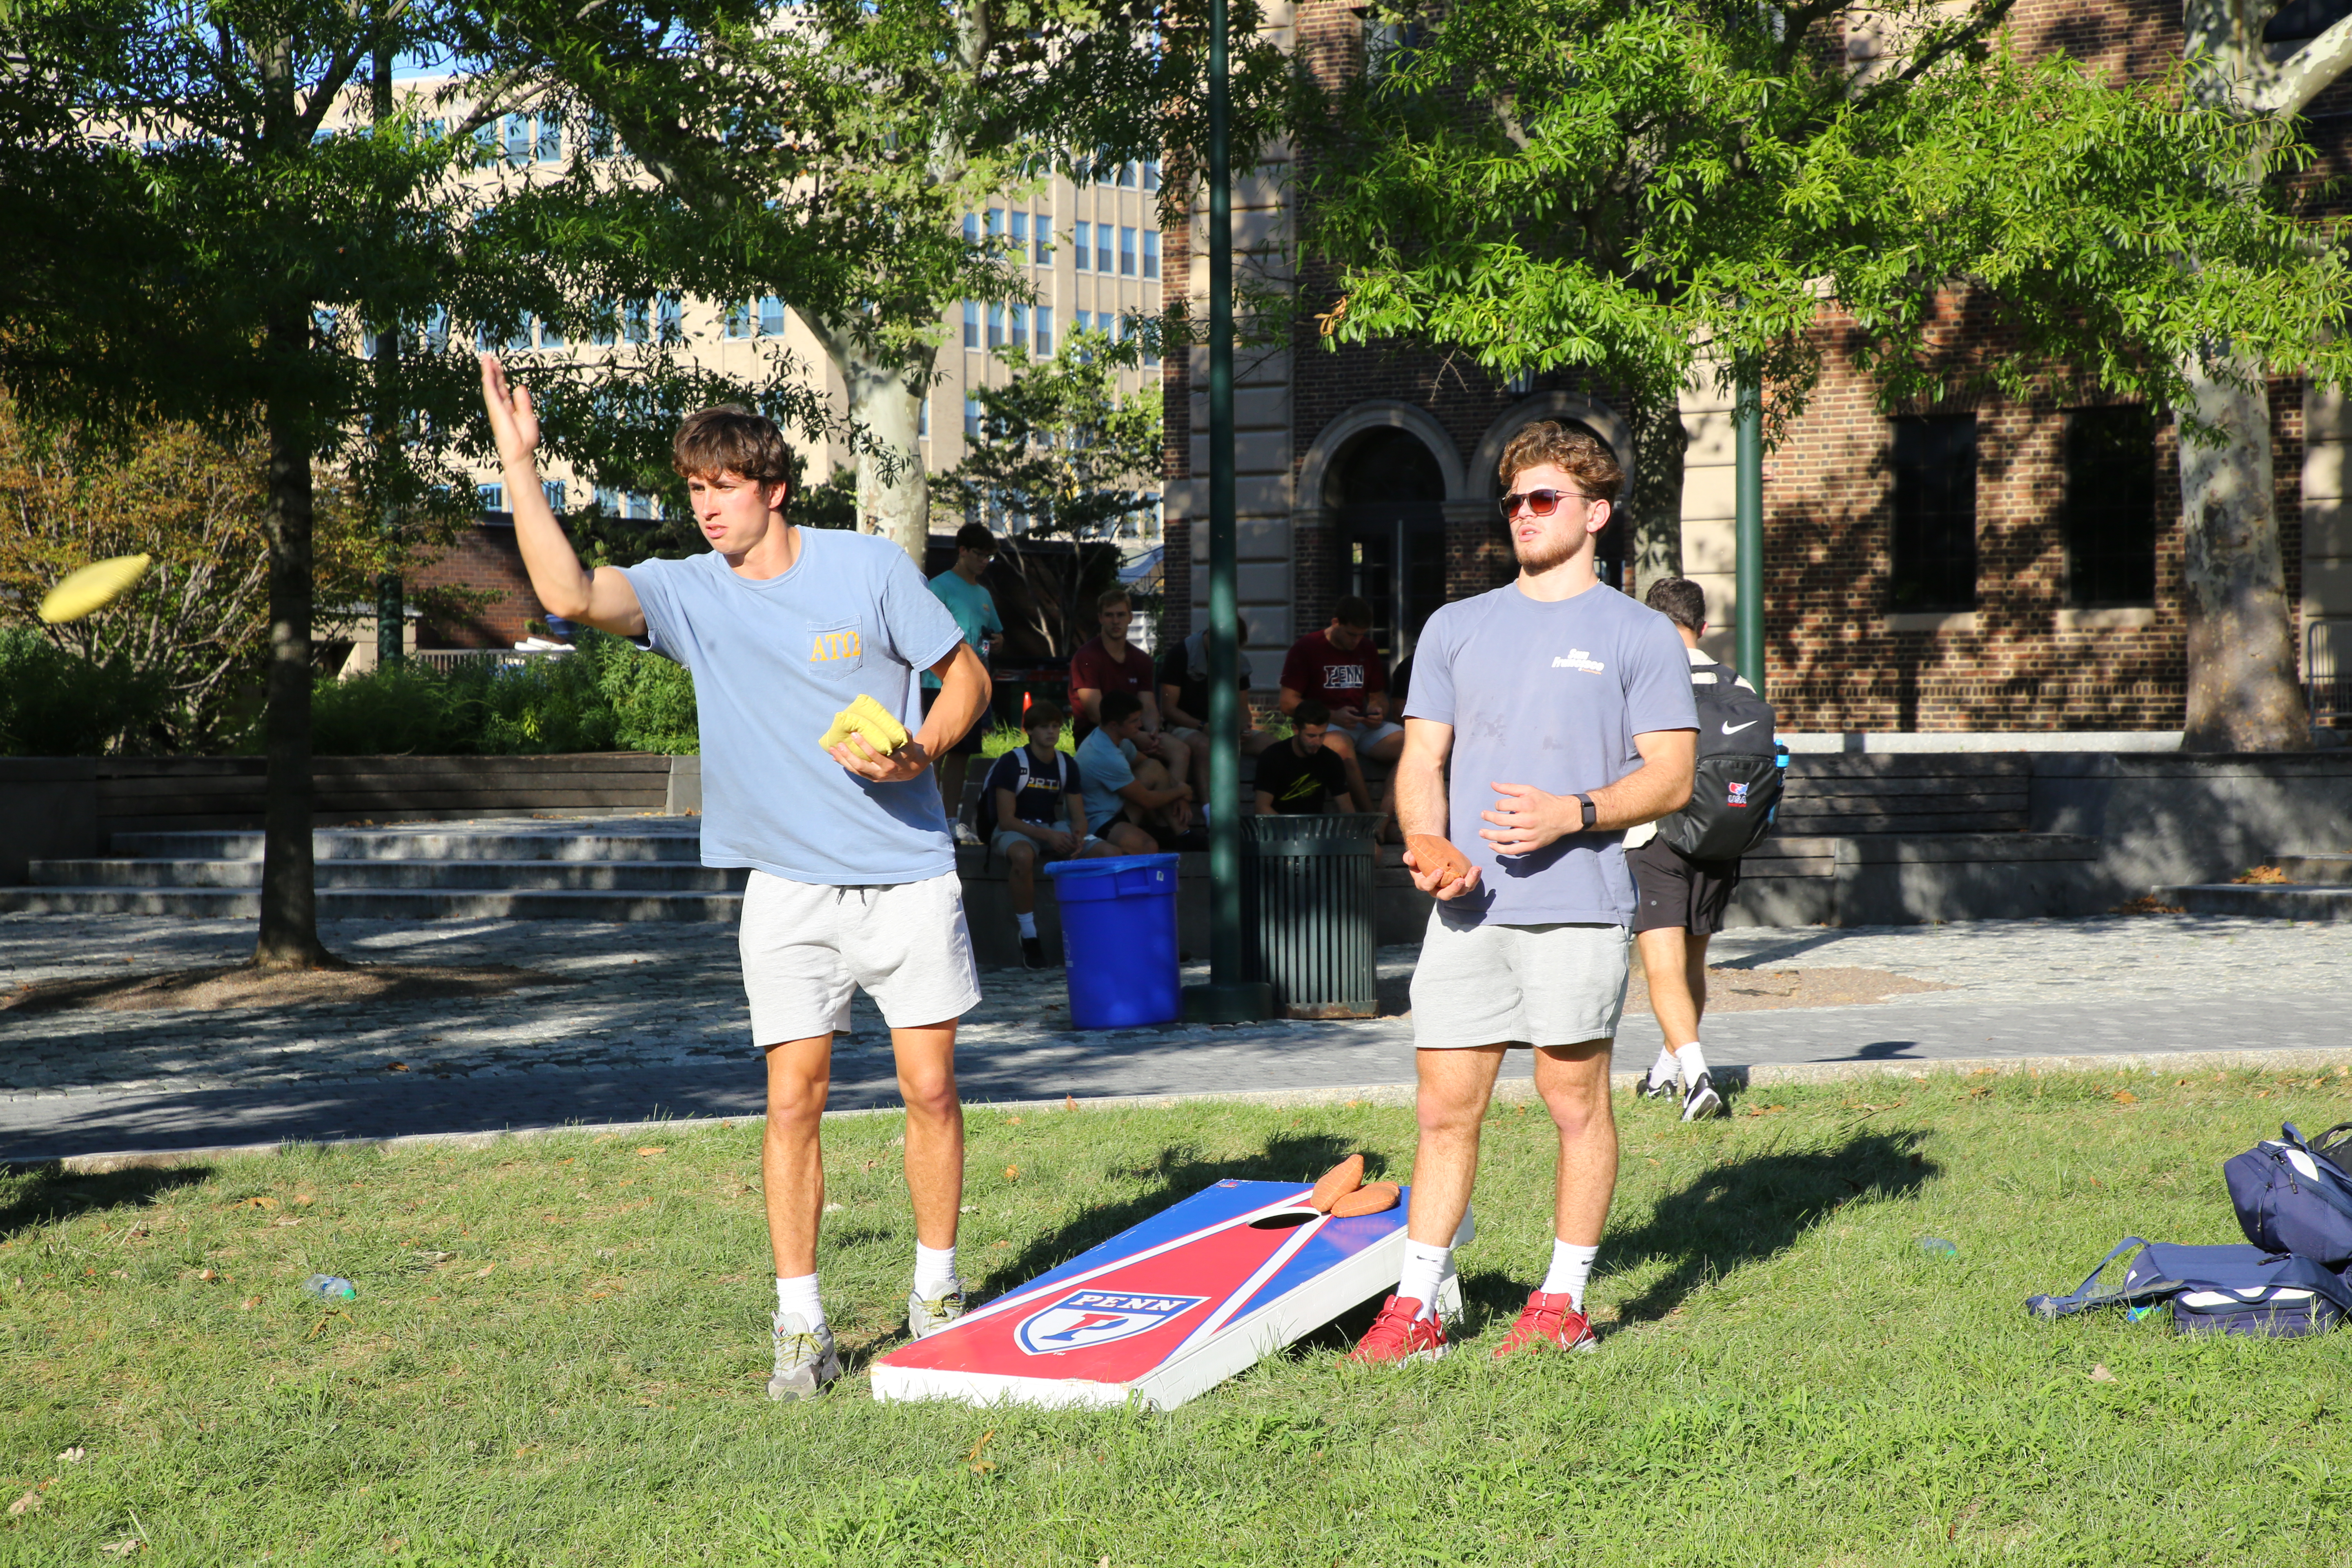 Two Penn students play cornhole.